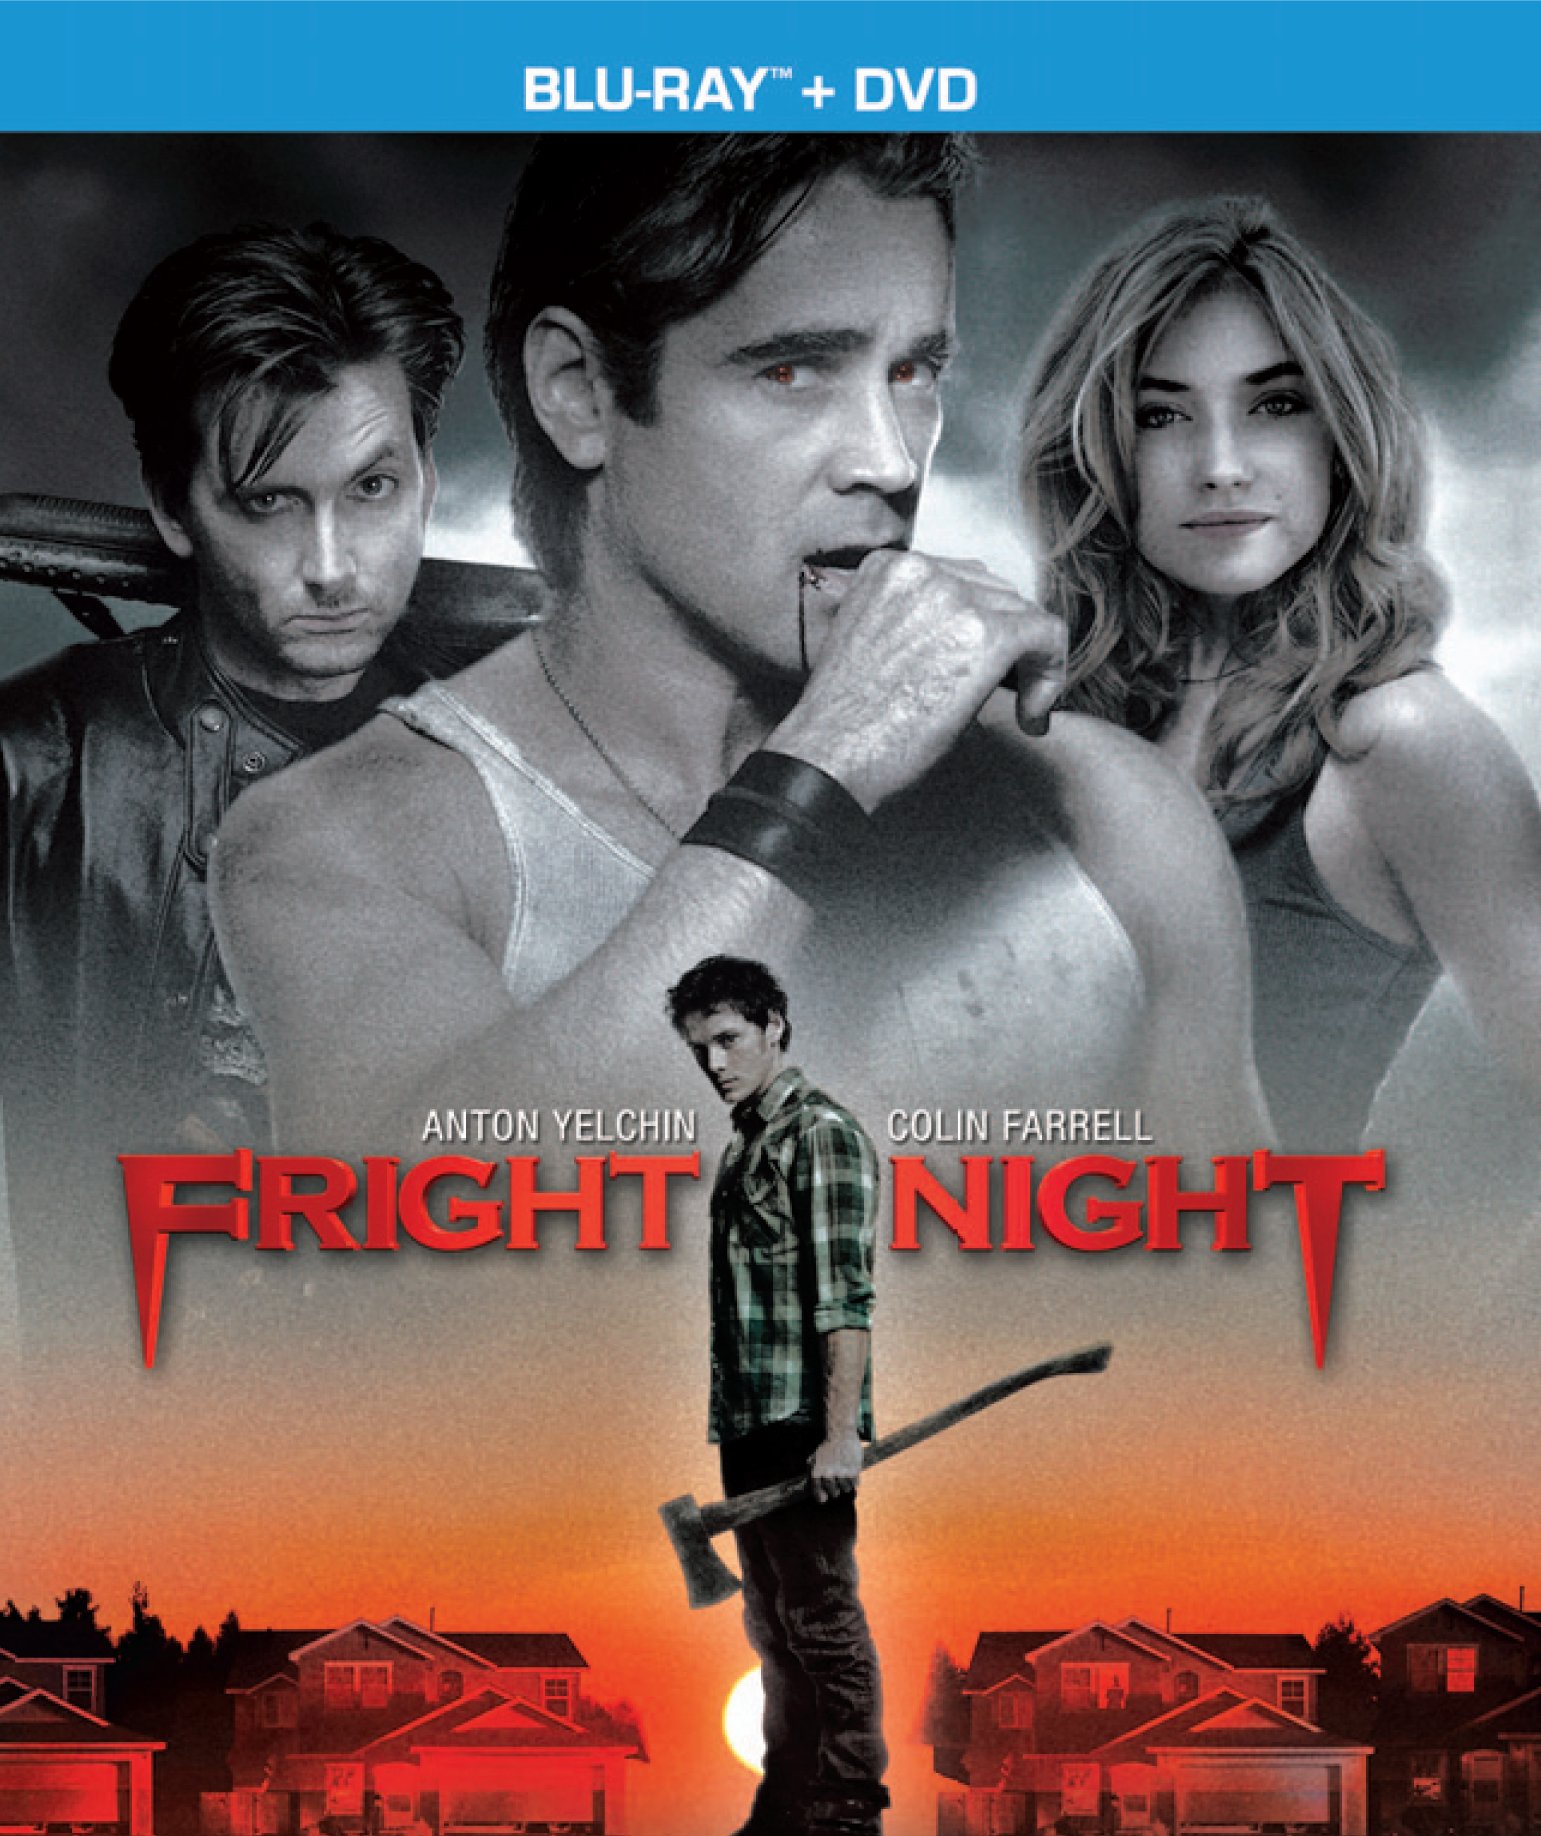 Fright Night (Two-Disc Blu-ray/DVD Combo) - $3.99 - Amazon